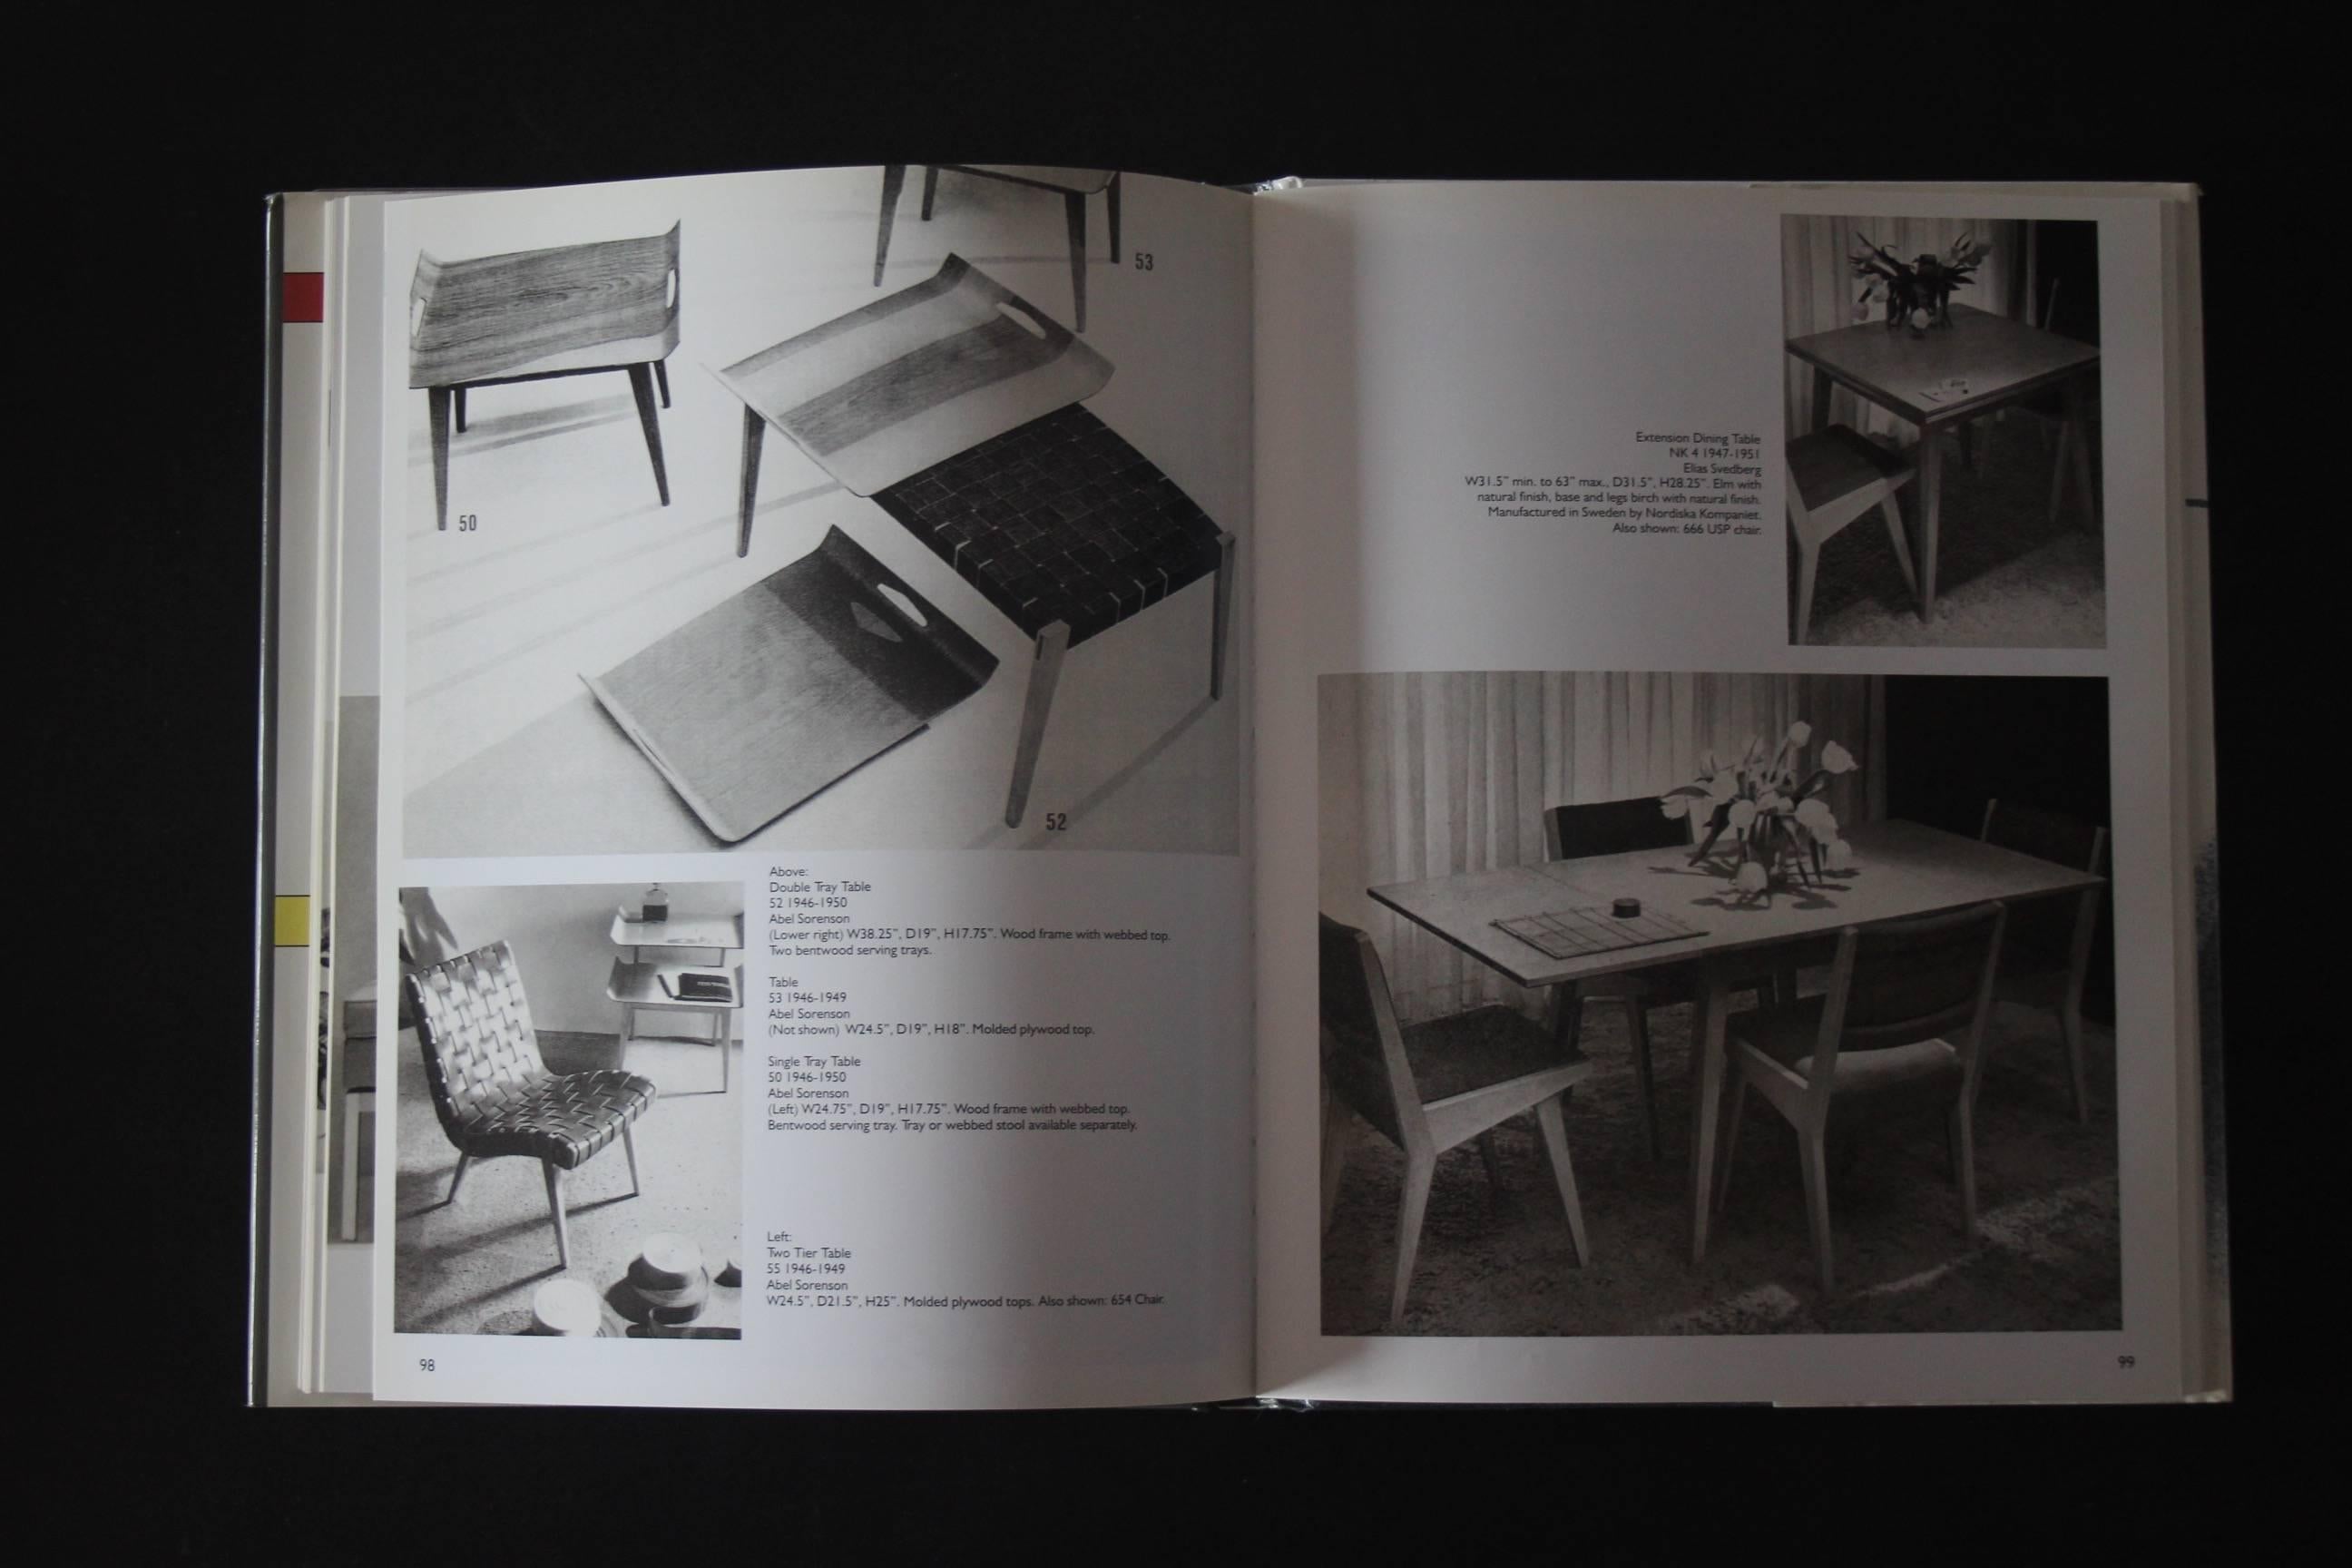 North American Knoll Furniture